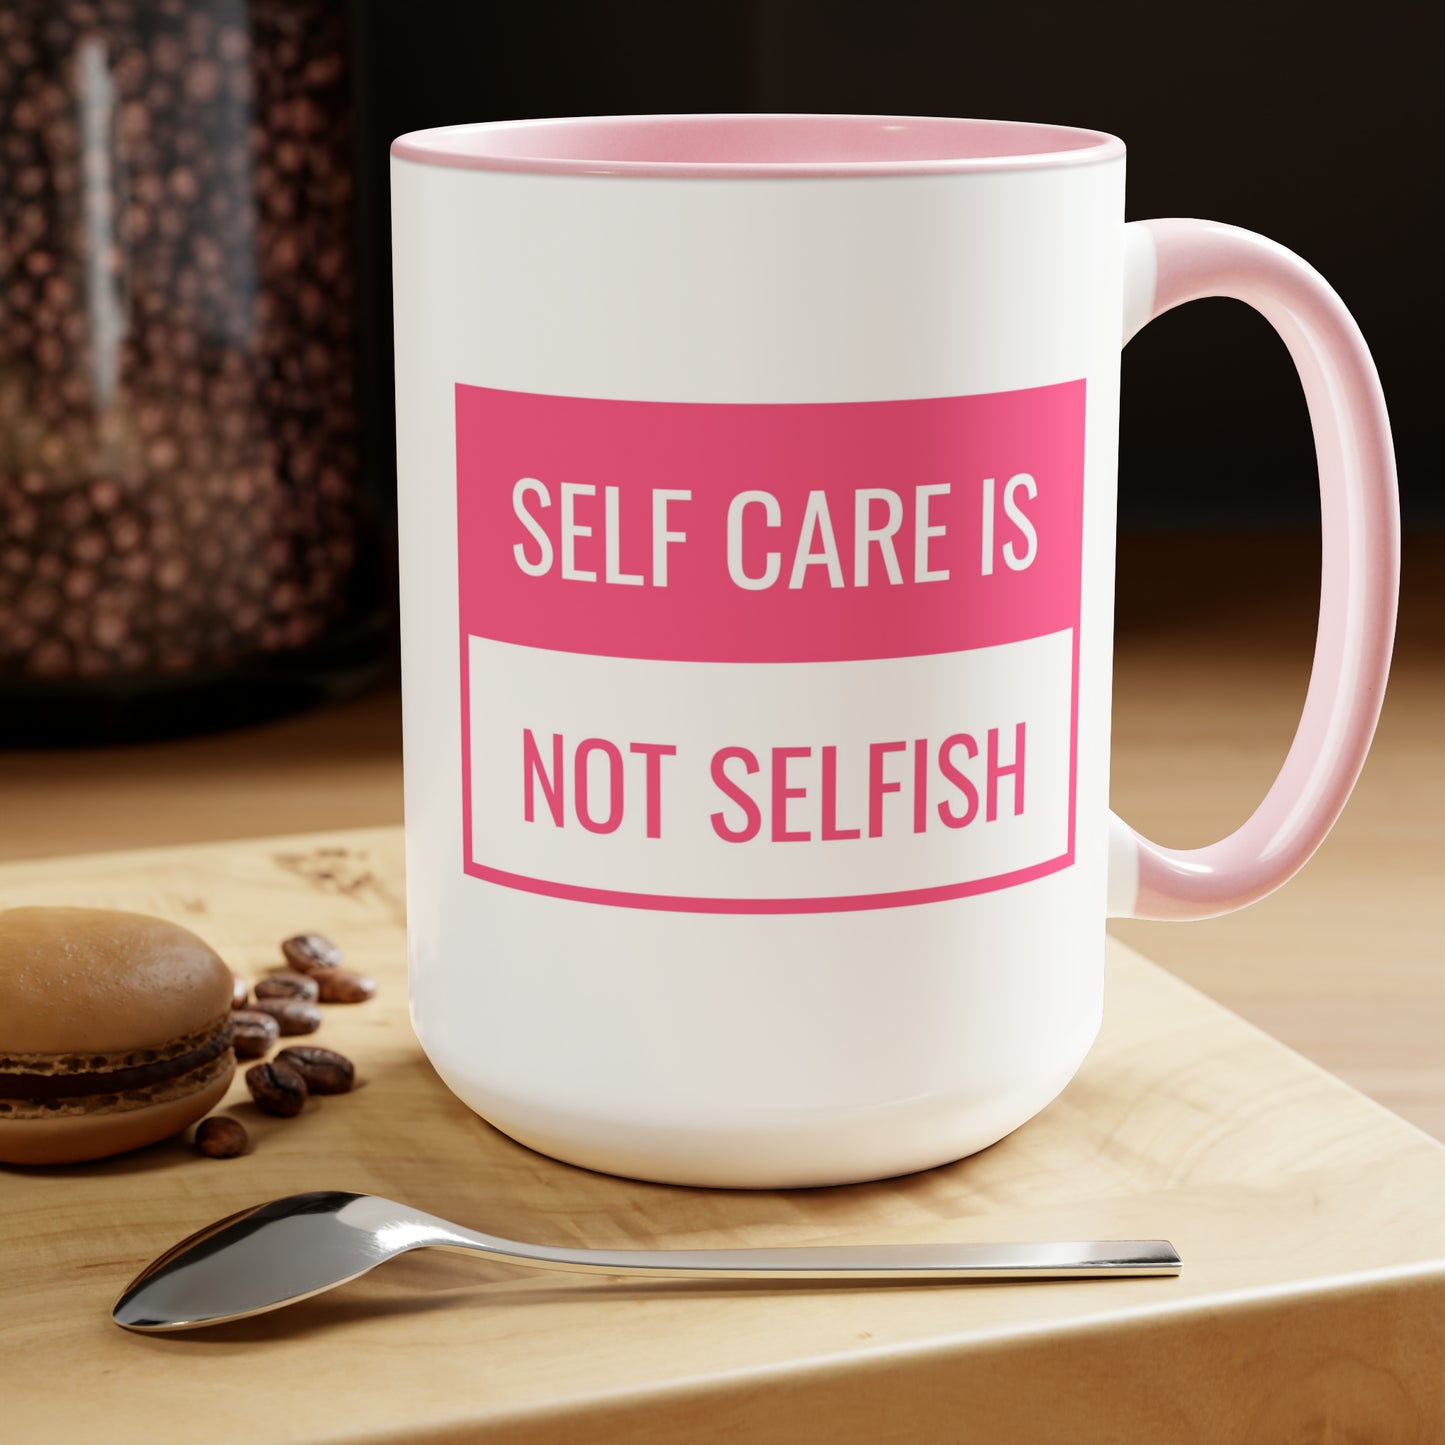 Bless Yourself Happy - Self Care Is Not Selfish - High Vibe Coffee Mug